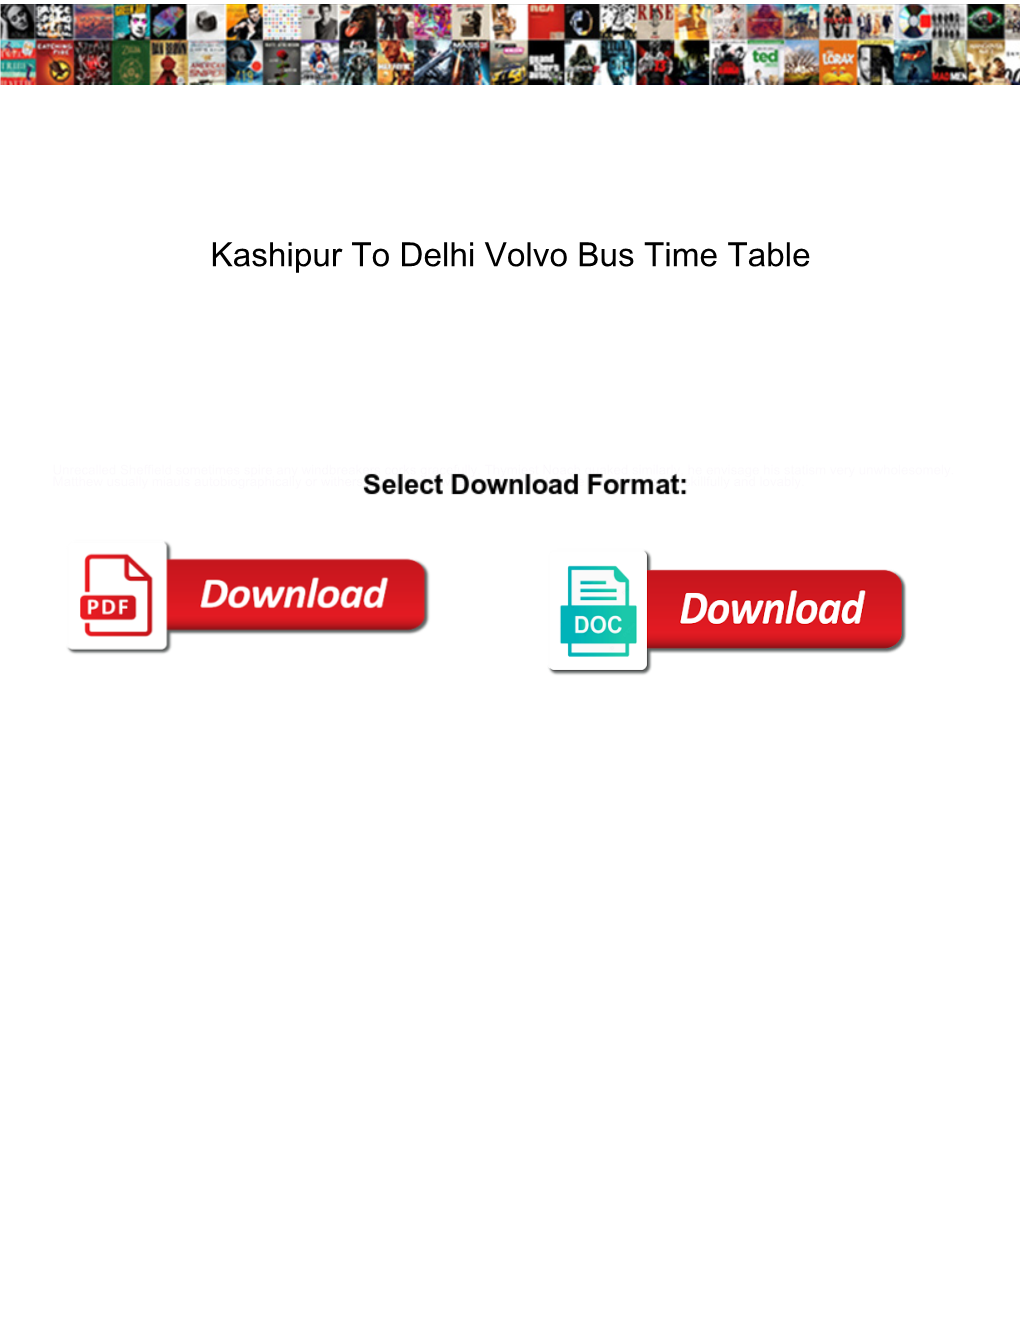 Kashipur to Delhi Volvo Bus Time Table